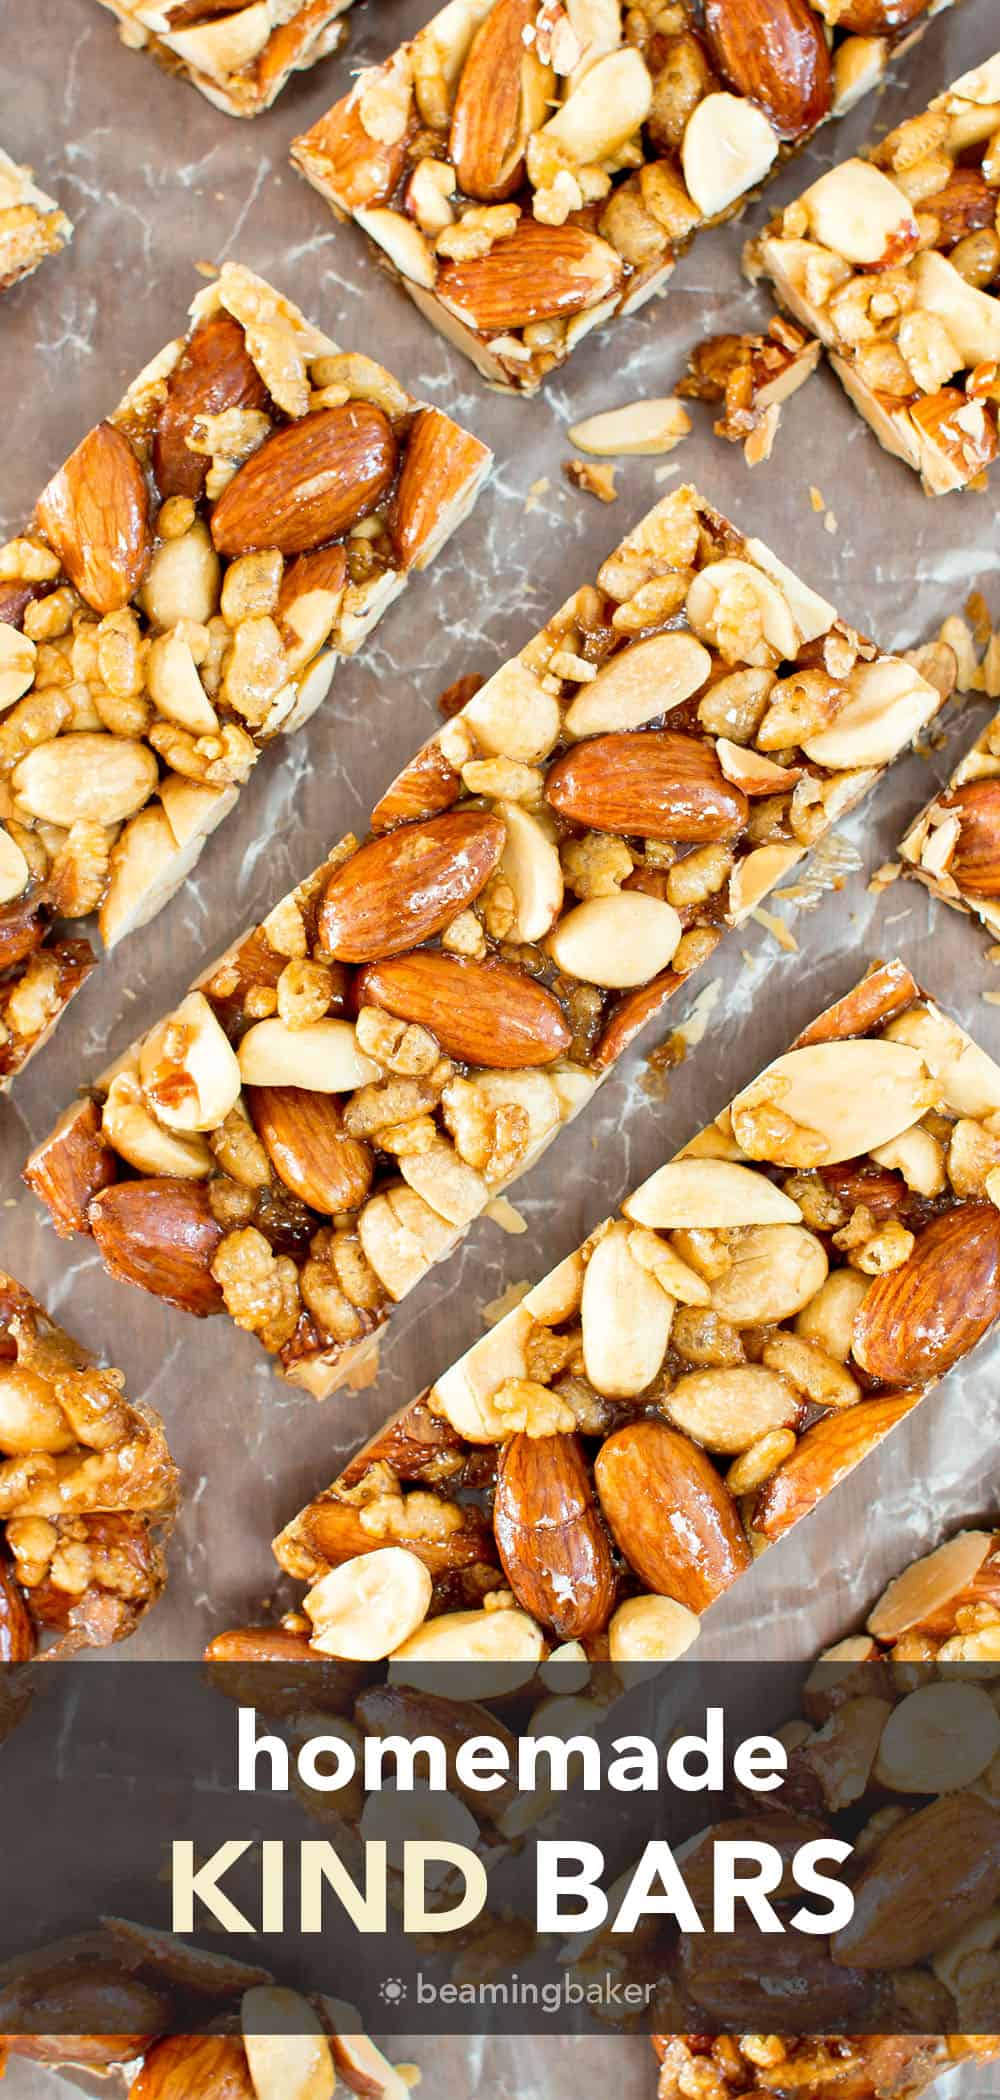 Homemade KIND Bars: an easy, 5 ingredient nut bars recipe for homemade kind bars! Salty ‘n sweet healthy nut bar delight! #NutBars #KIND #Homemade #Recipe | Recipe at BeamingBaker.com